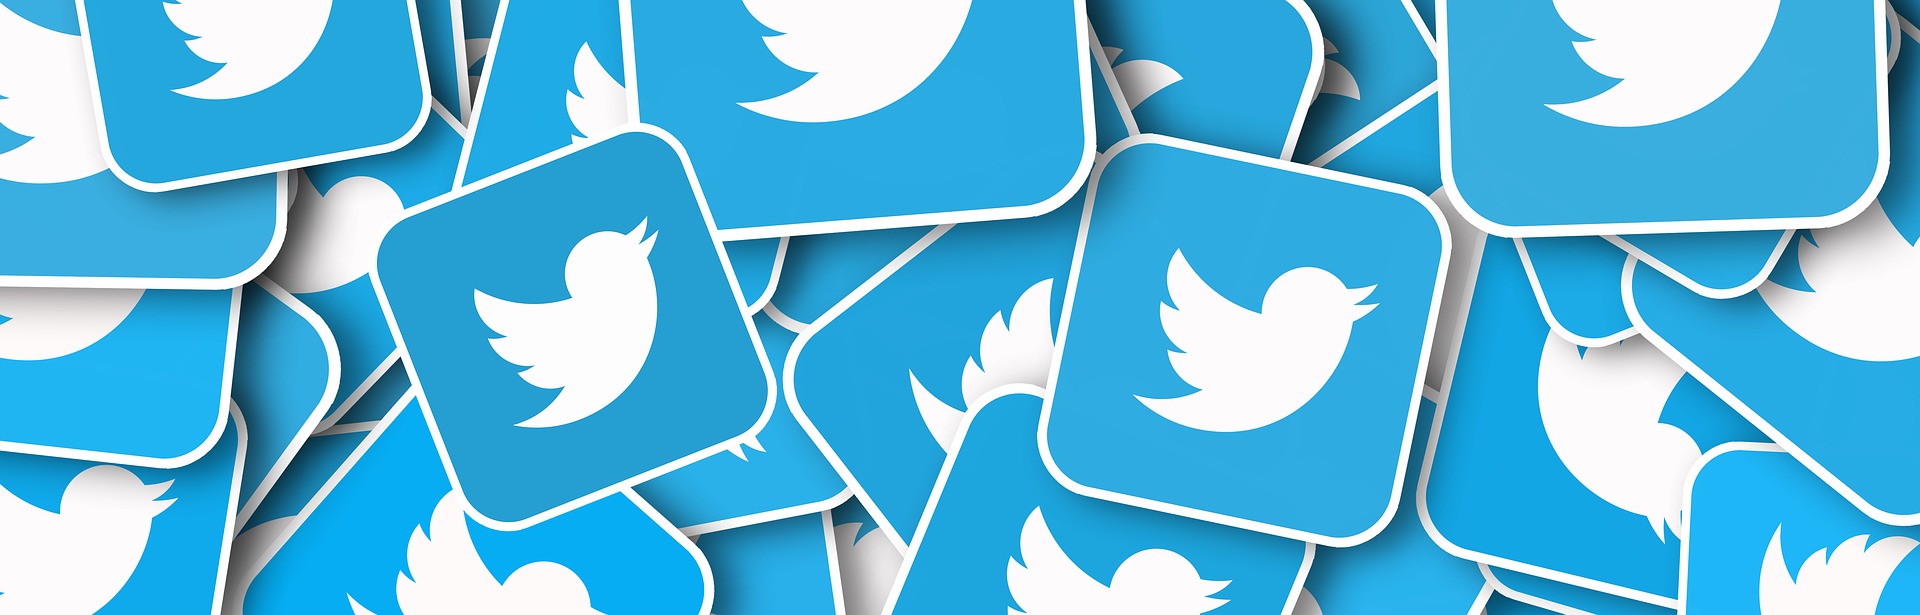 Litecoin Lights Up Twitter With Verified Blue Tick Badge